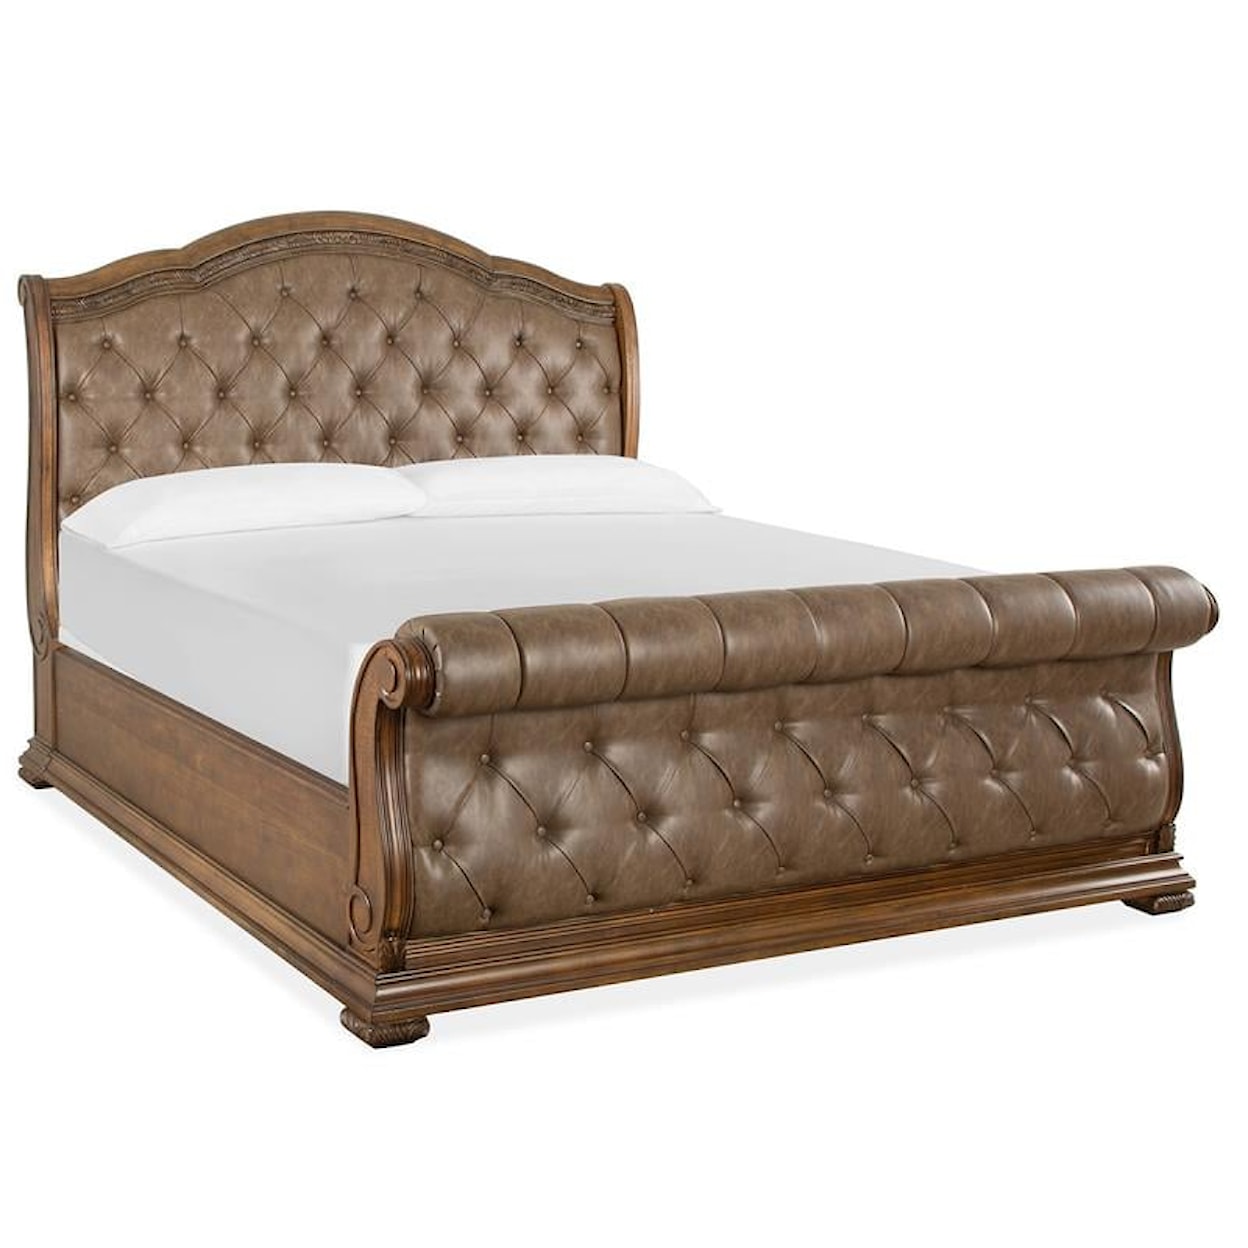 Magnussen Home Durango Bedroom King Upholstered Sleigh Bed